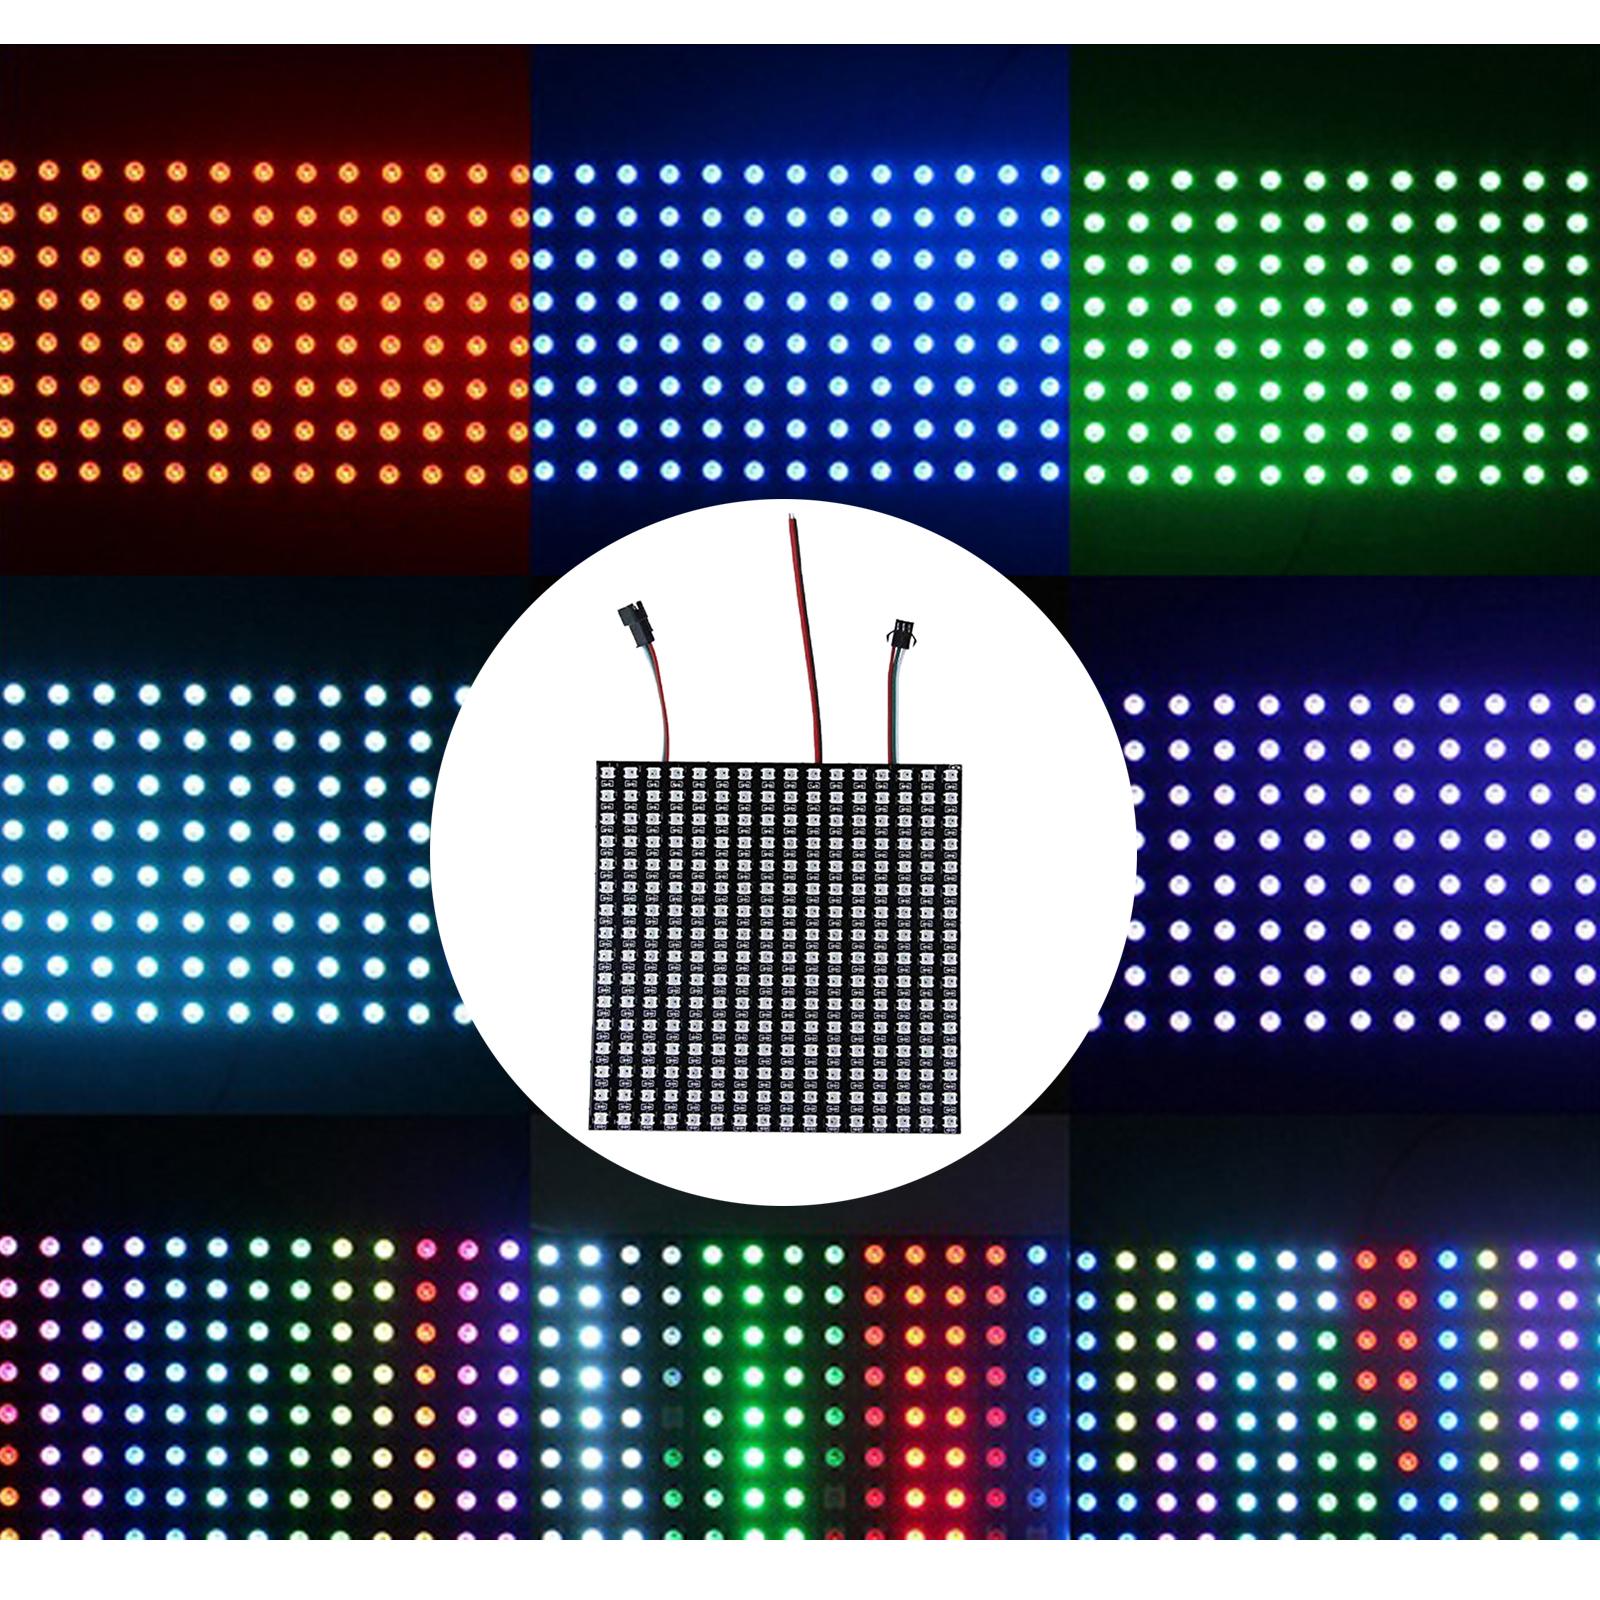 LED Pixels Matrix Panel WS2812B RGB Digital Image Video Text Display 16x16cm